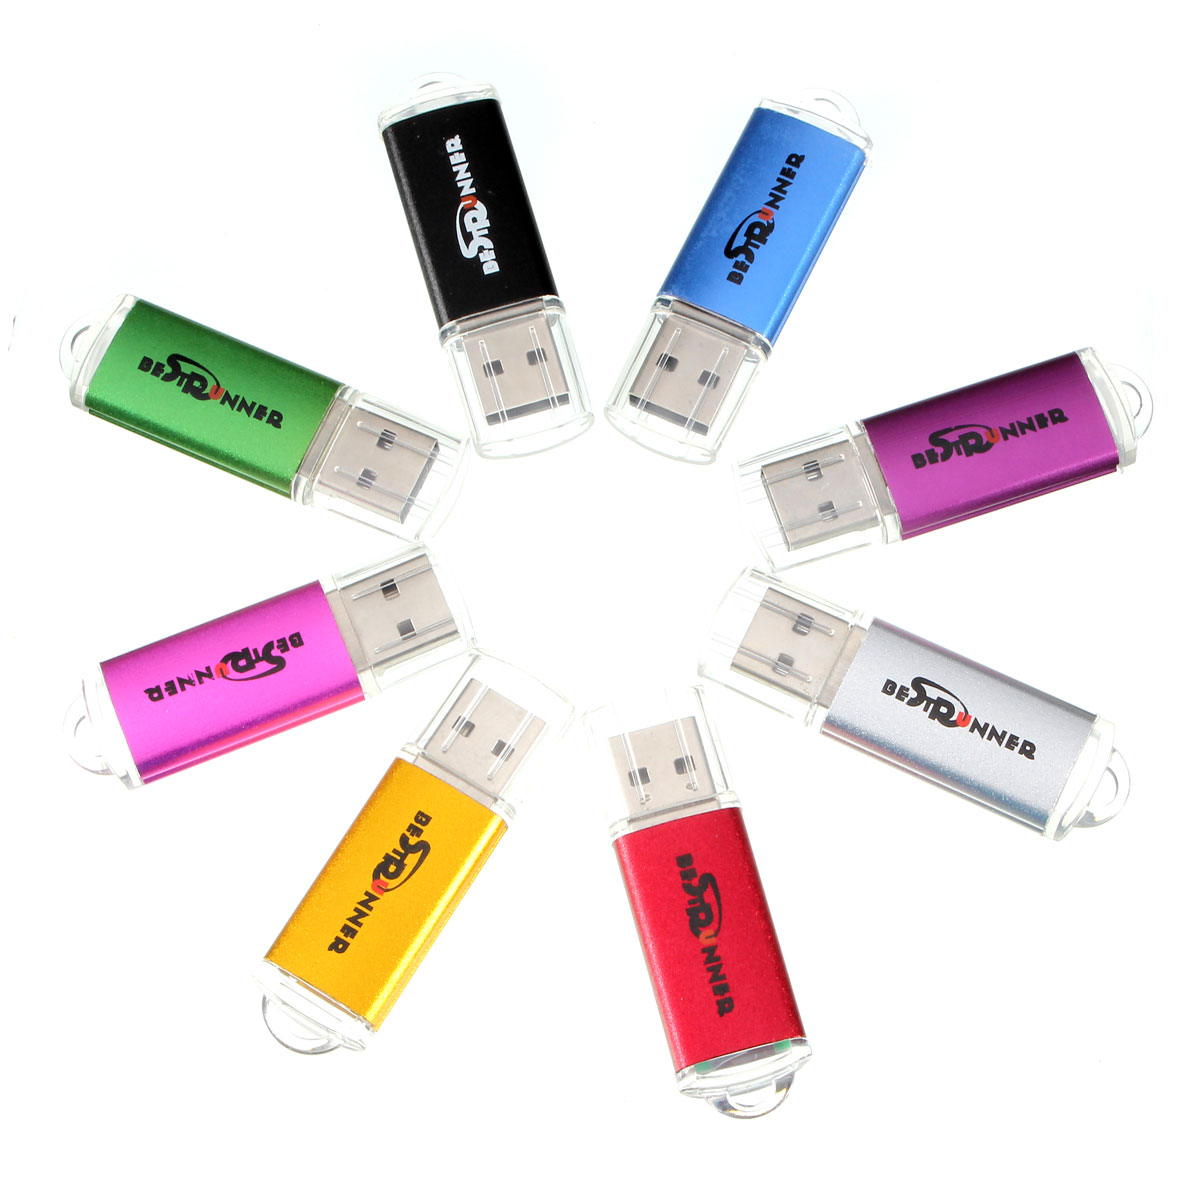 Bestrunner-Multi-Color-Portable-USB-20-1GB960M-Pendrive-USB-Disk-for-Macbook-Laptop-PC-1723018-3